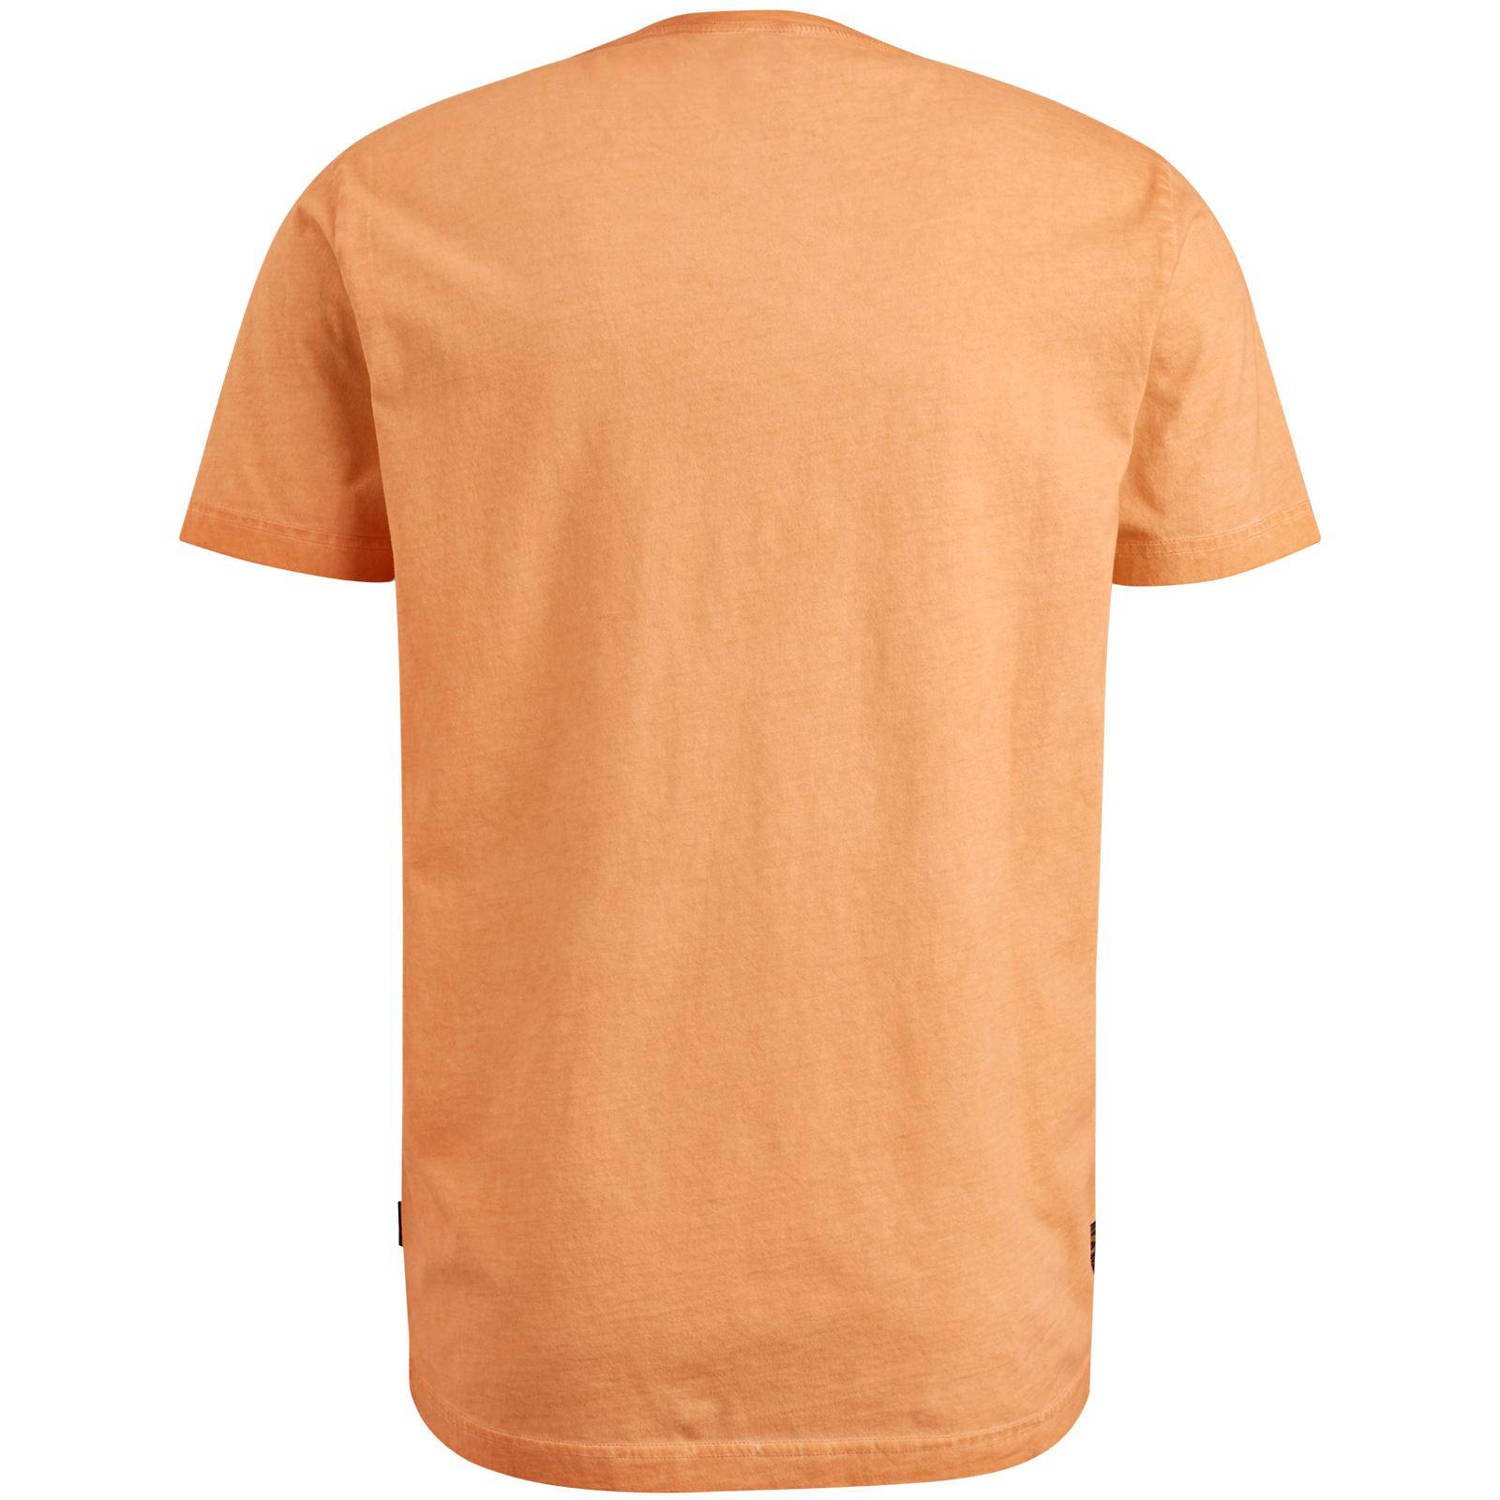 PME Legend T-shirt met logo oranje